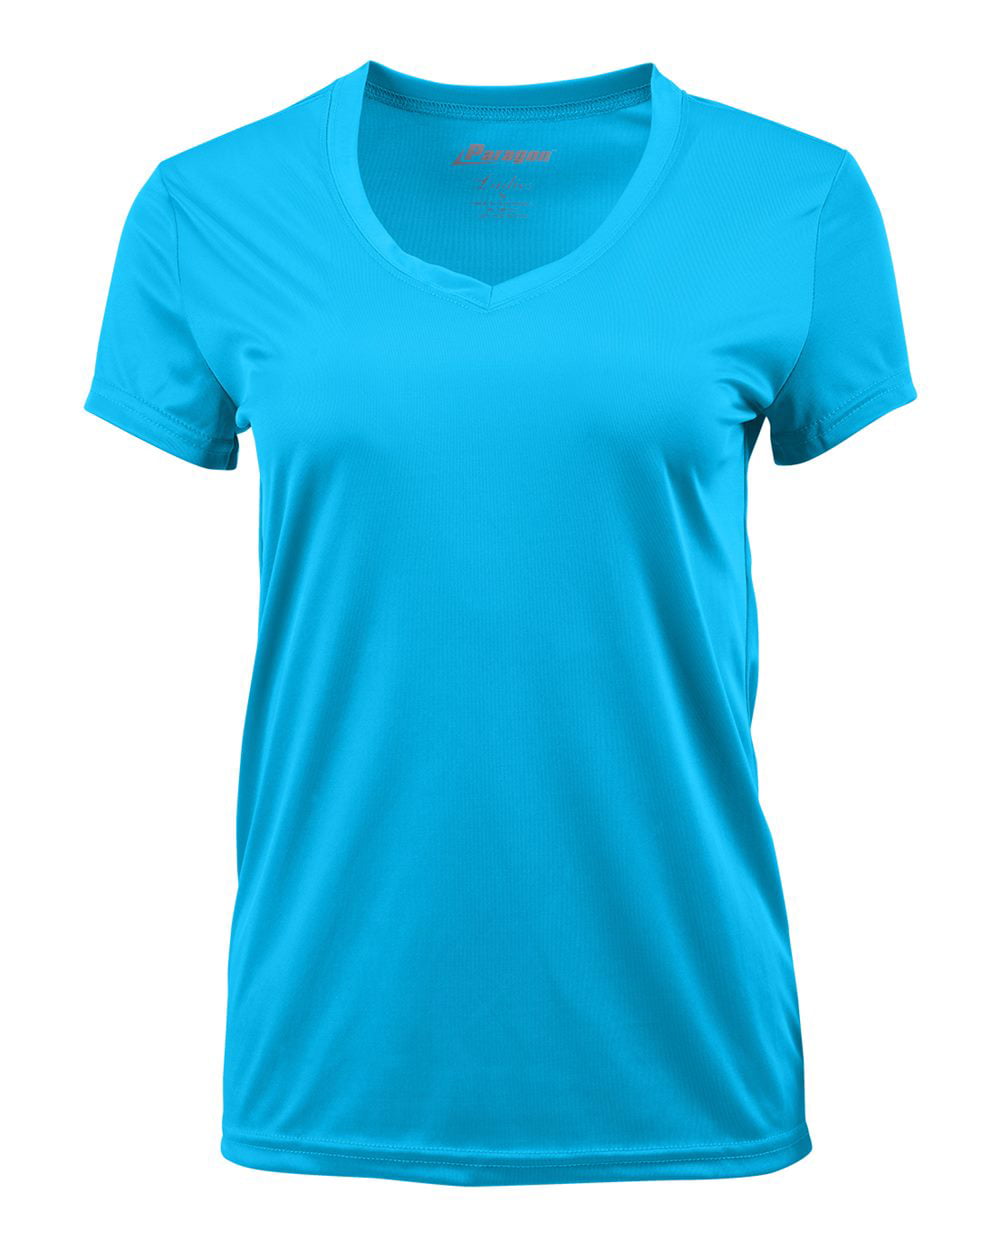 Buy Turquoise Tops for Women by VINAAN Online